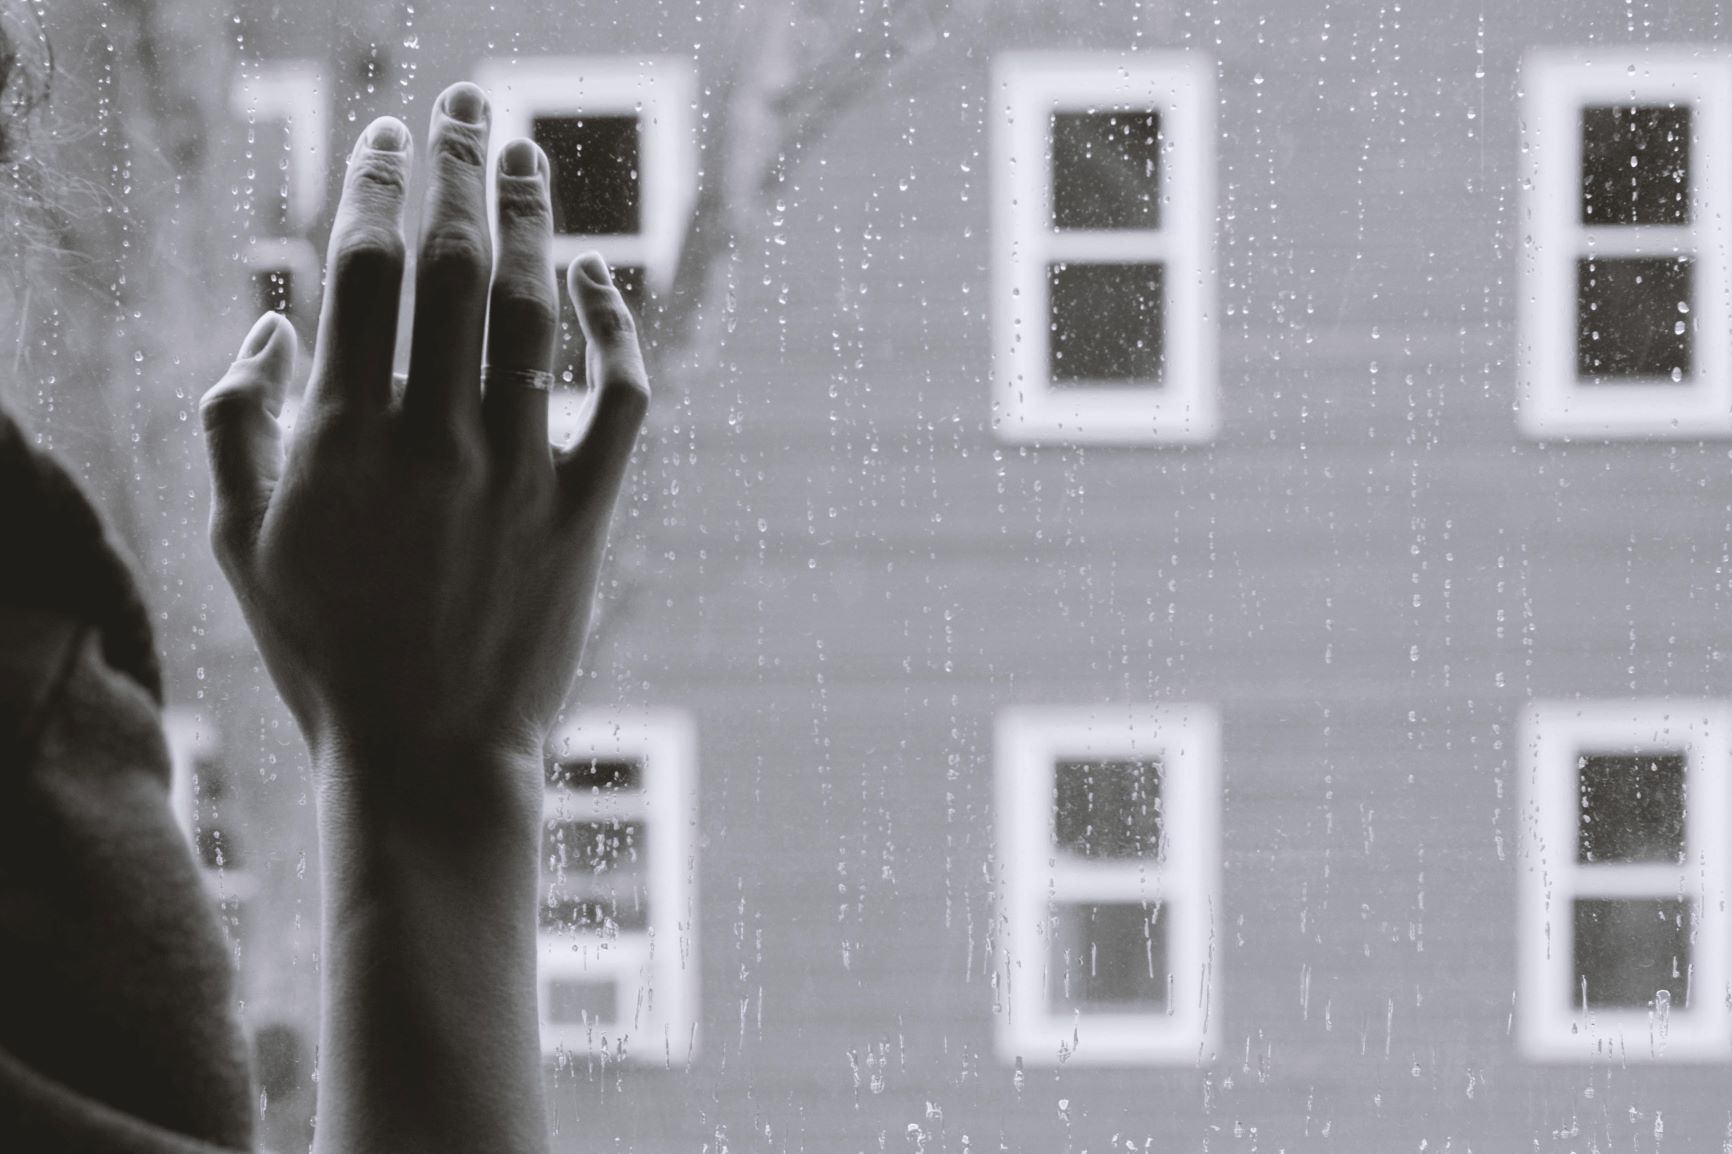 rain falling outside with a hand on a window